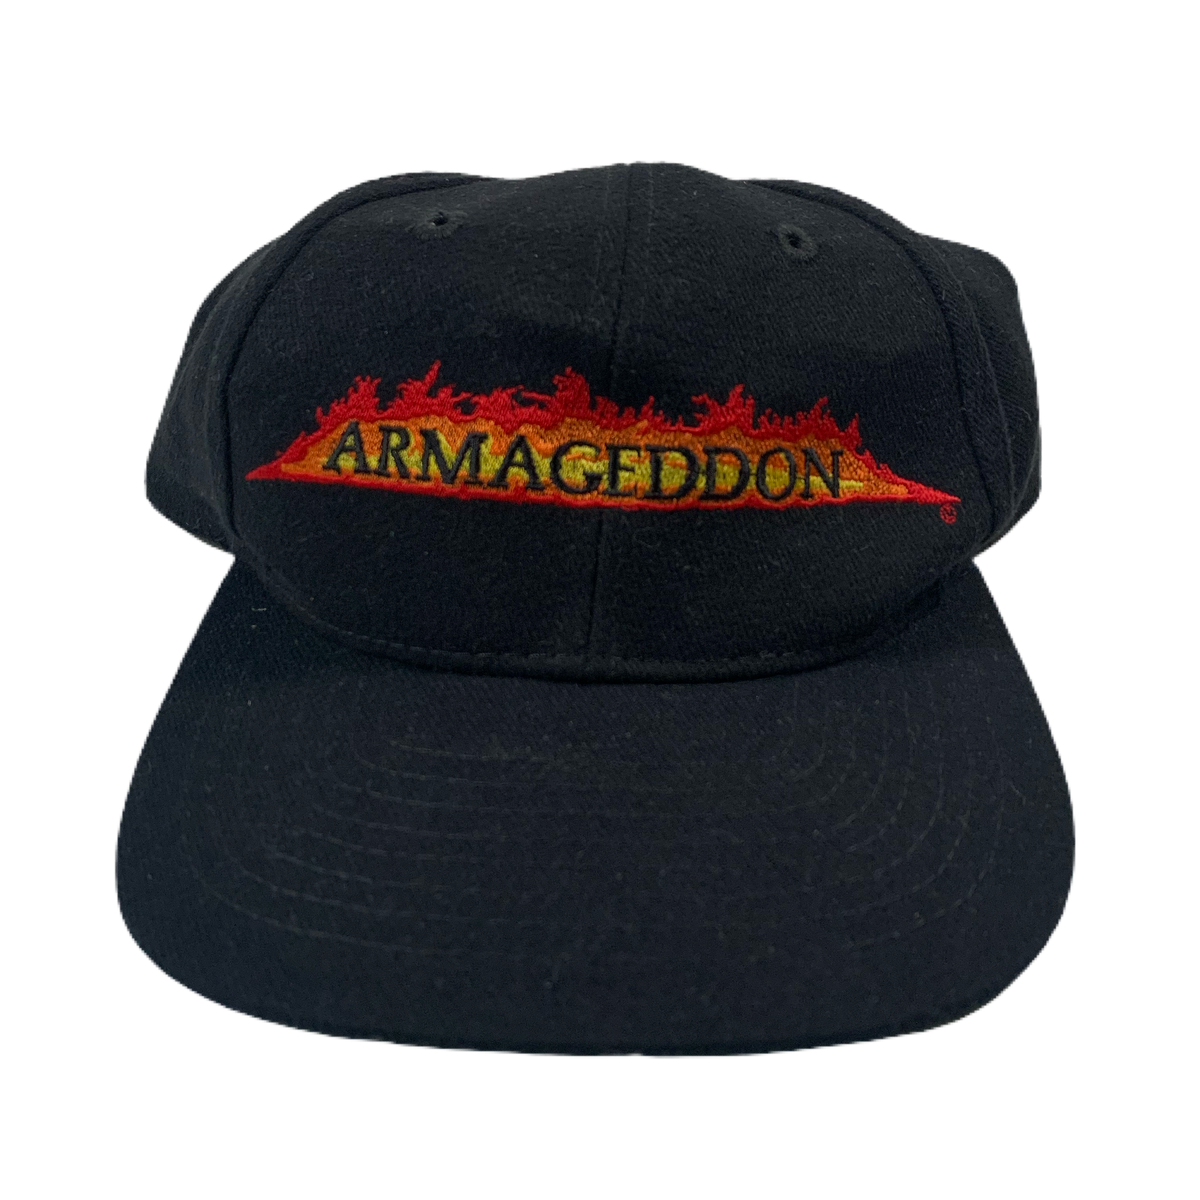 Vintage Armageddon “Michael Bay” Promo Hat - jointcustodydc